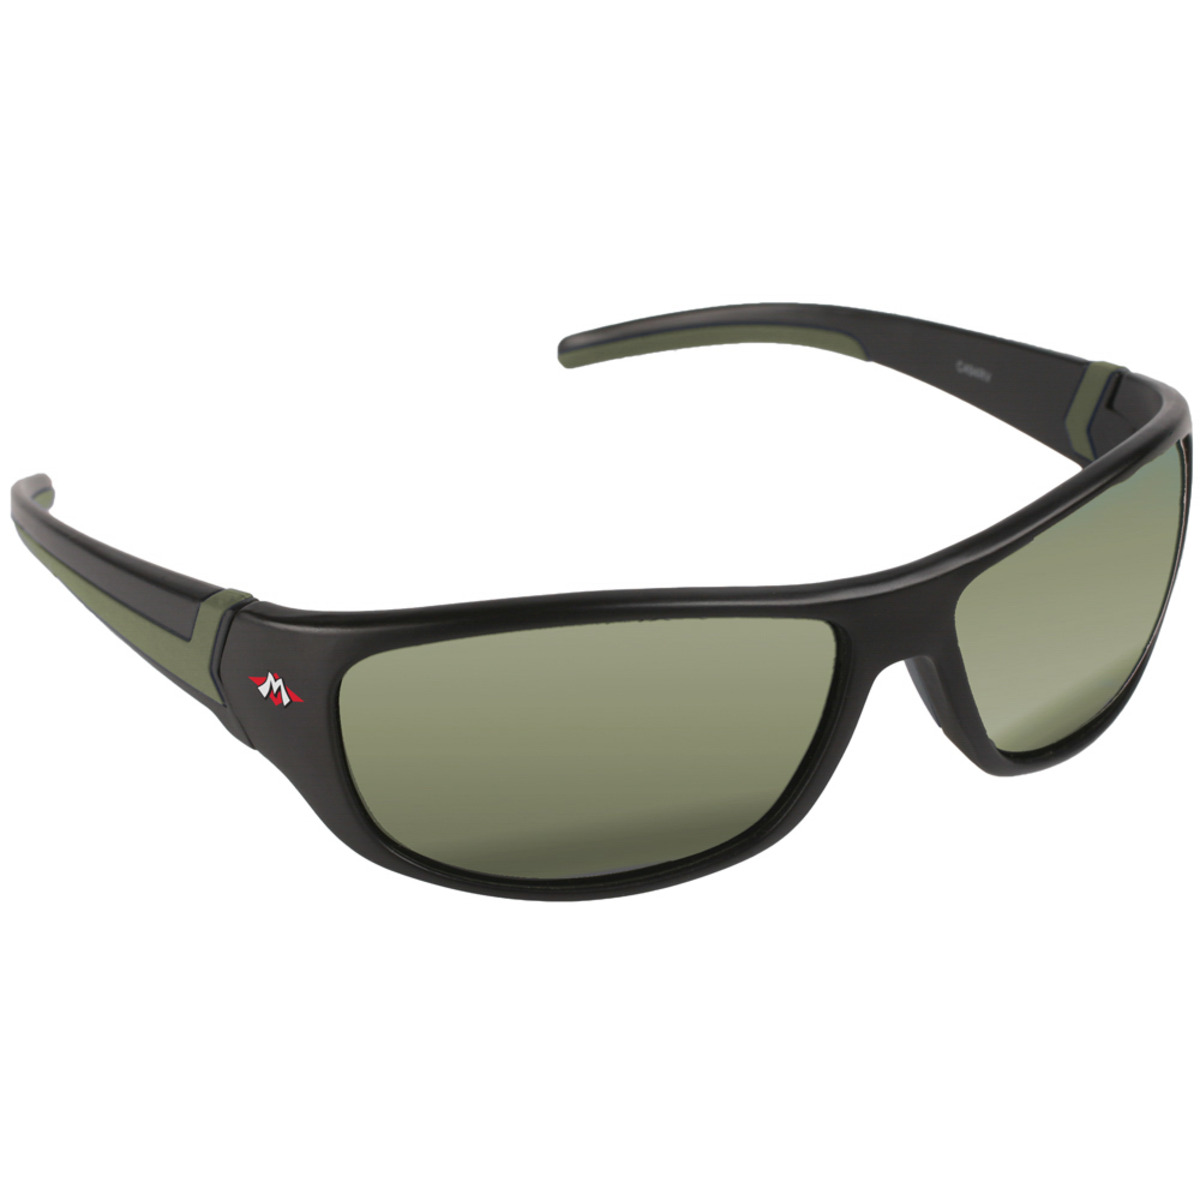 Mikado Sunglasses Polarized - 7516 GREEN